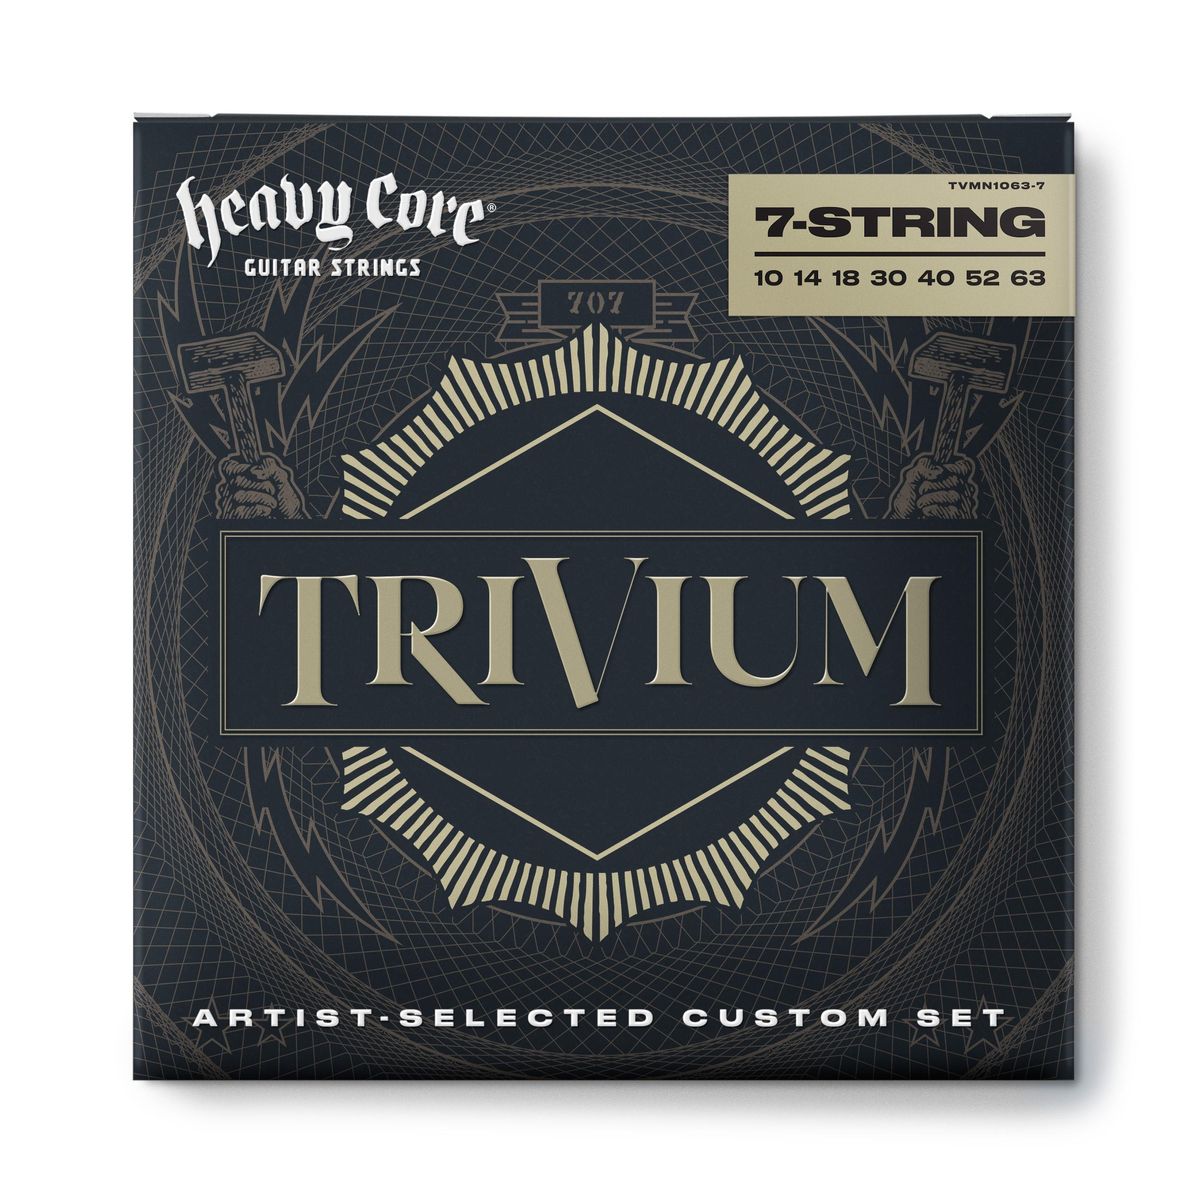 Dunlop and Trivium Unveil Heavy Core Strings